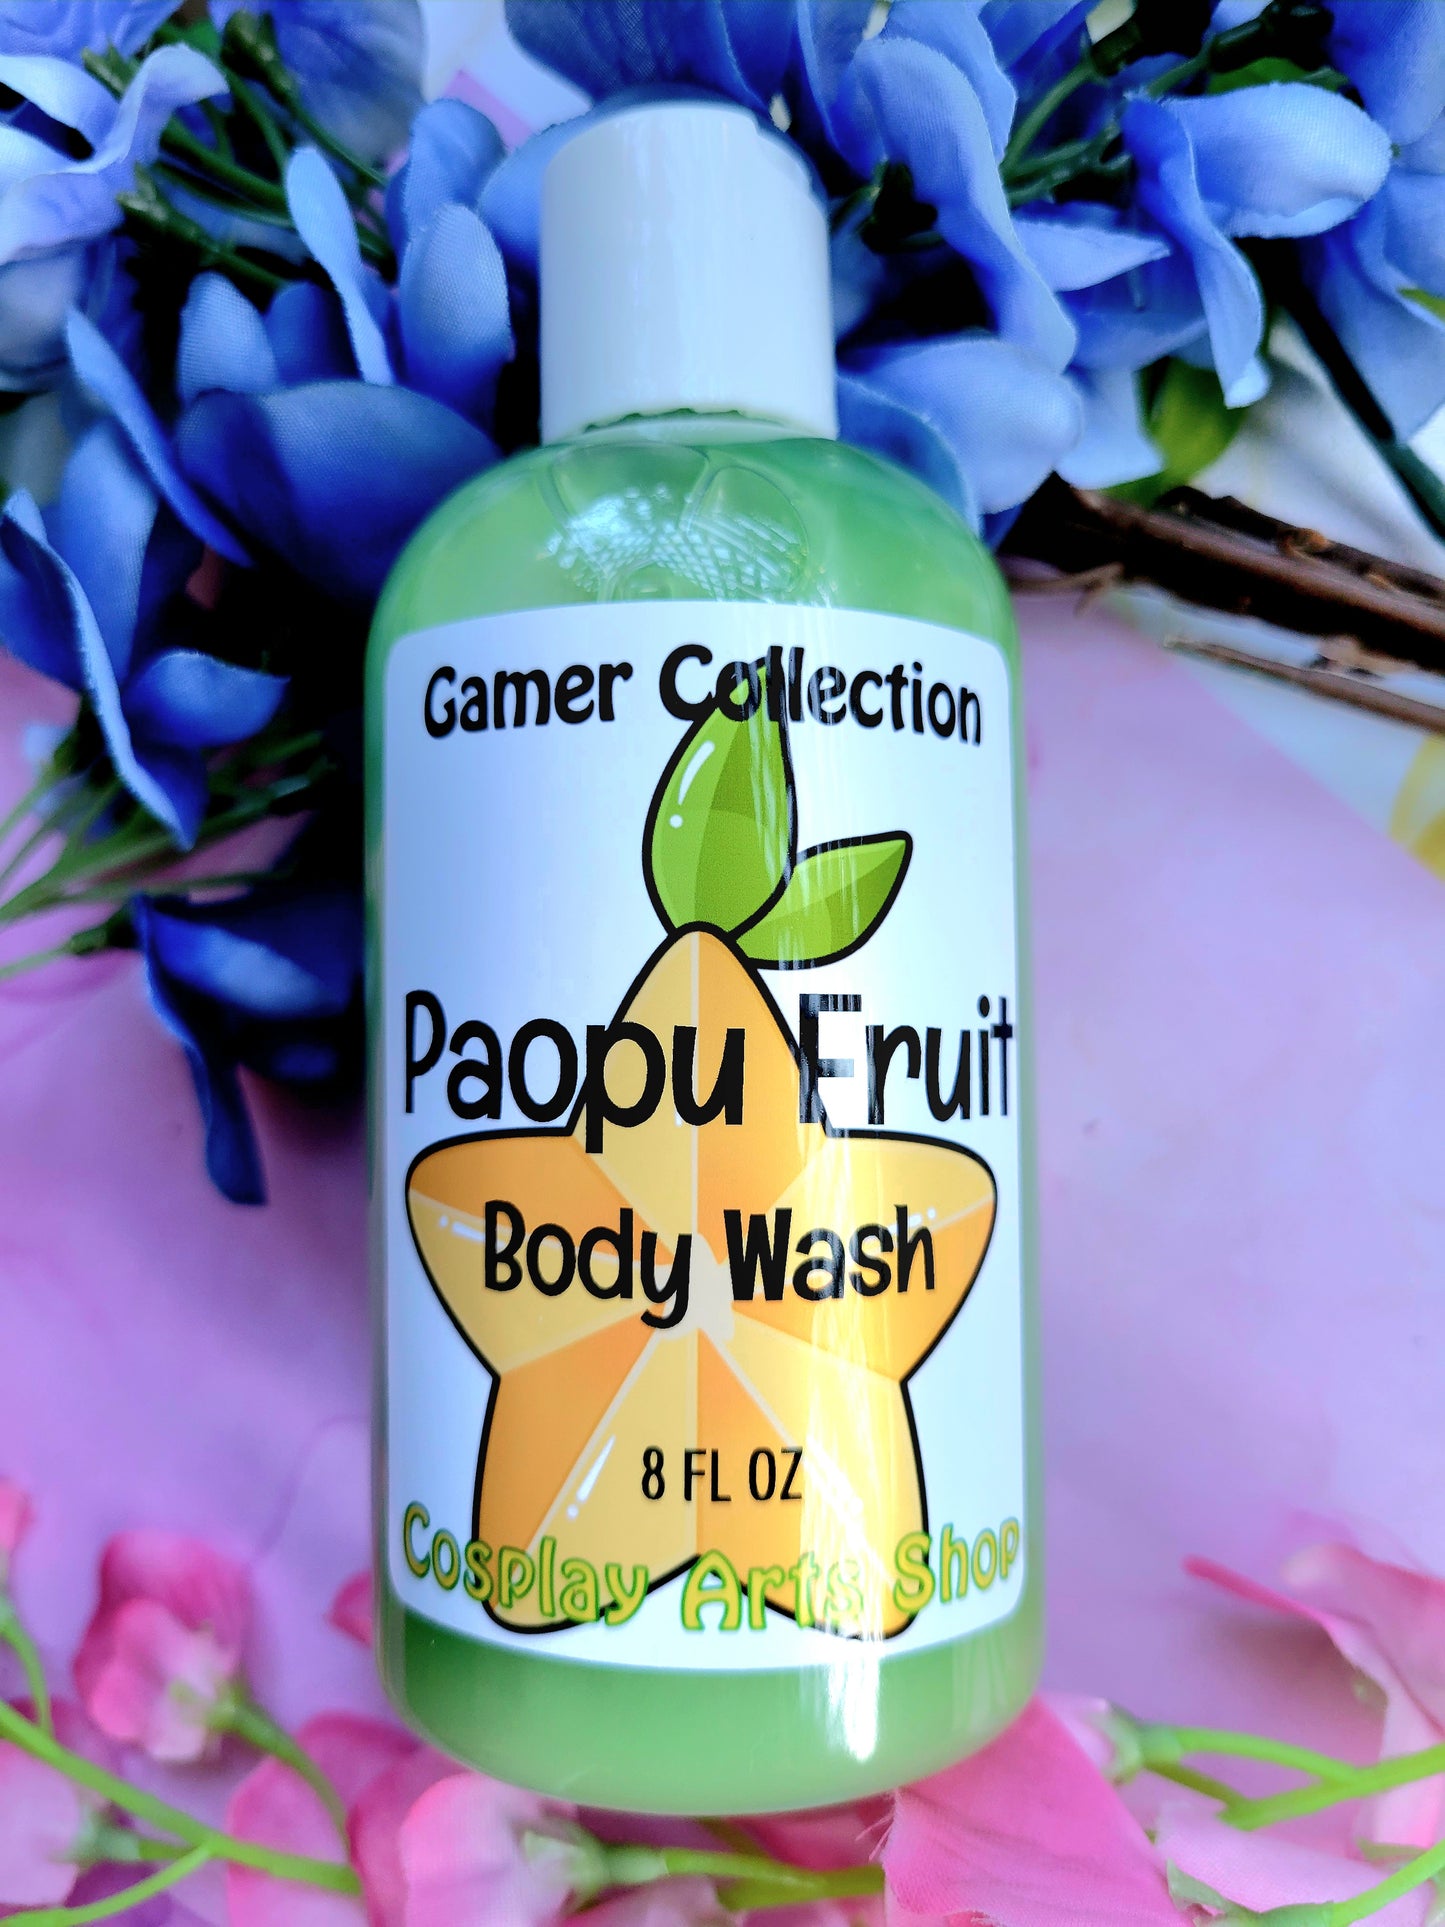 Paopu Fruit Body Wash - Cosplay Arts Shop